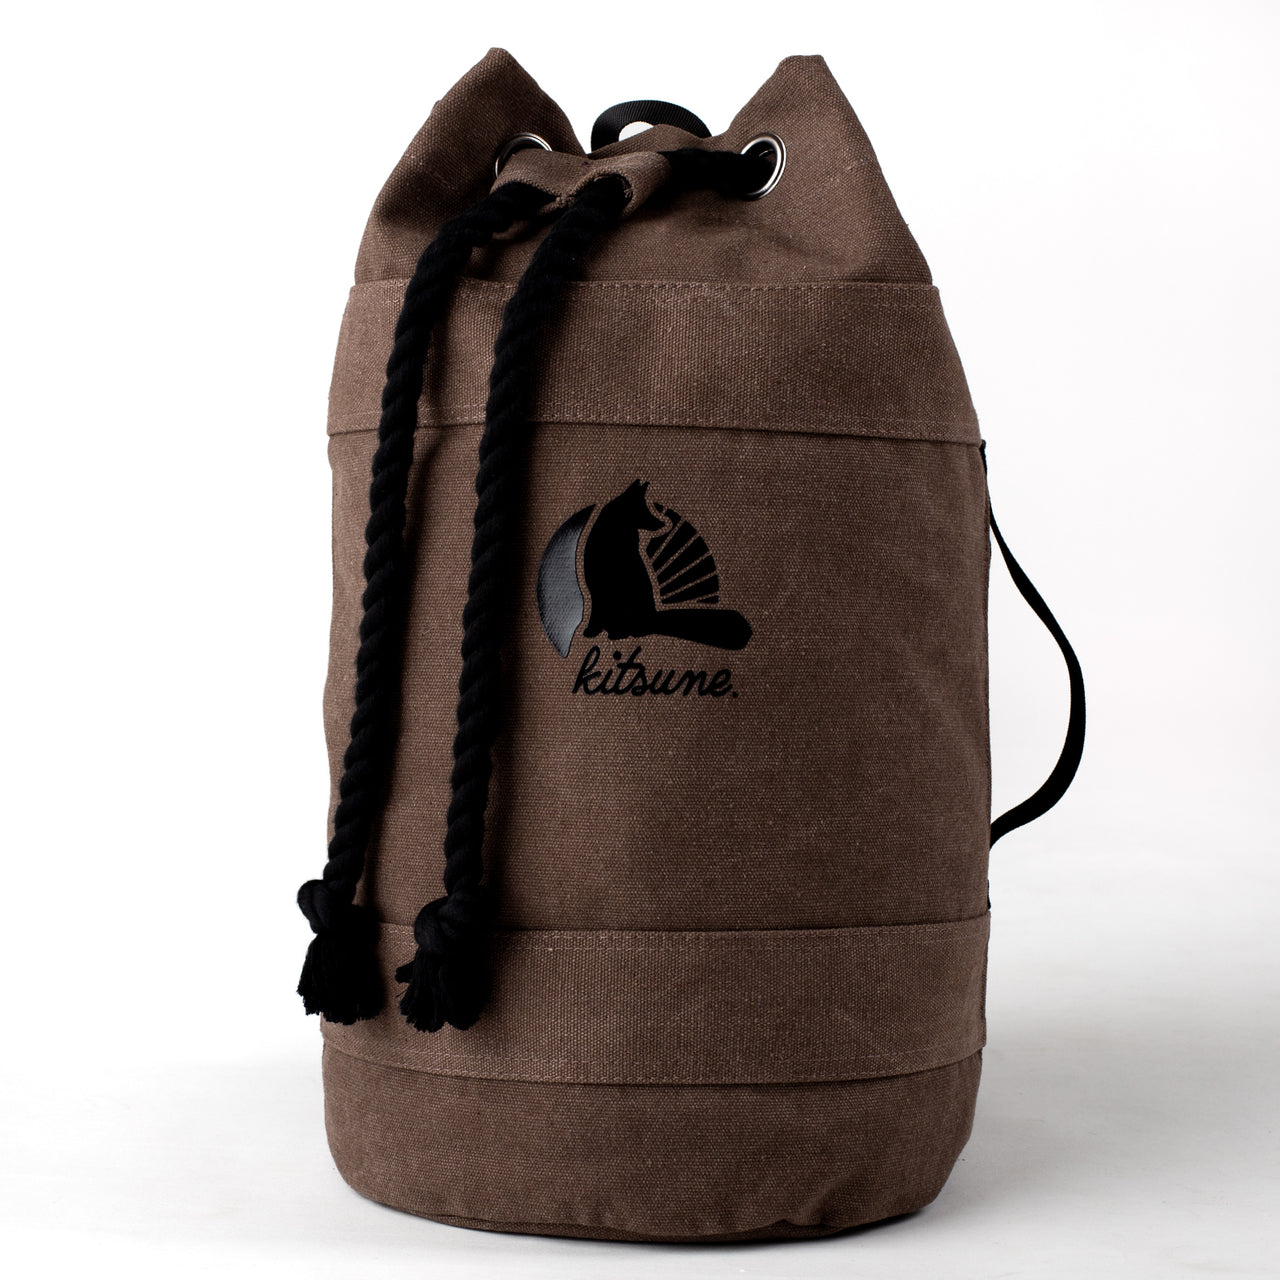 Kitsune "Barrage" Gear Bag - Brown